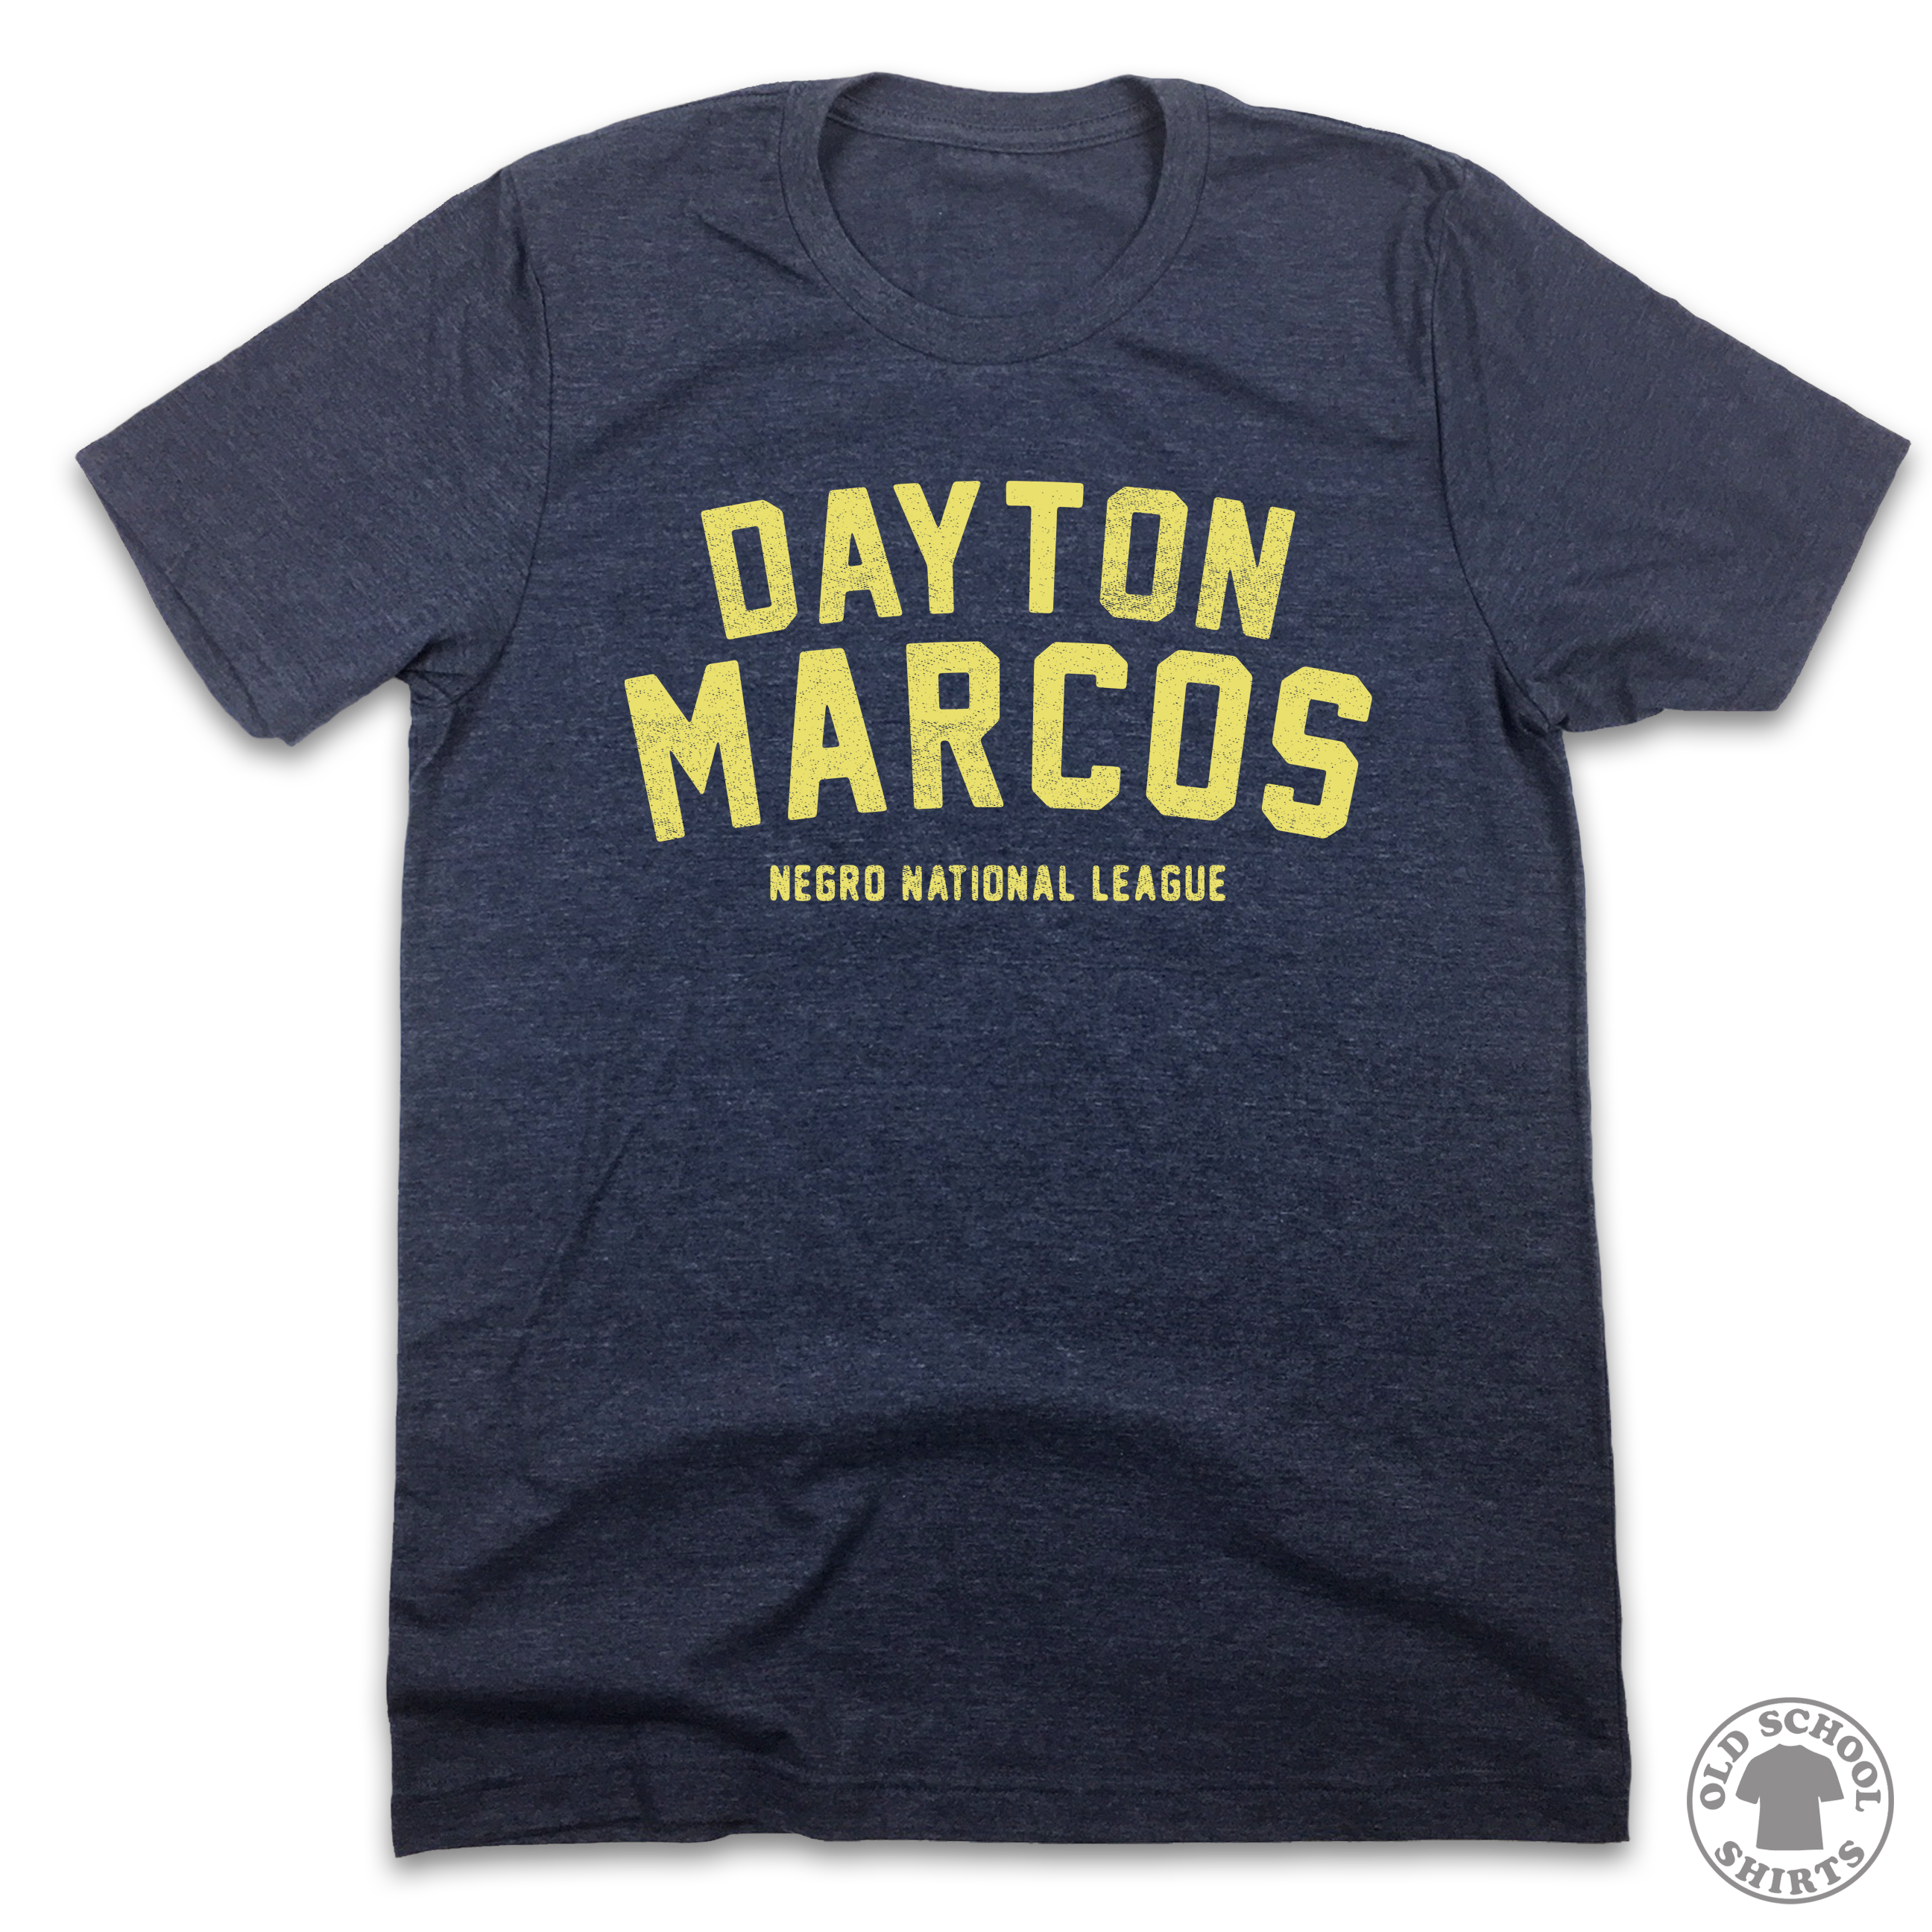 Dayton Marcos - Old School Shirts- Retro Sports T Shirts